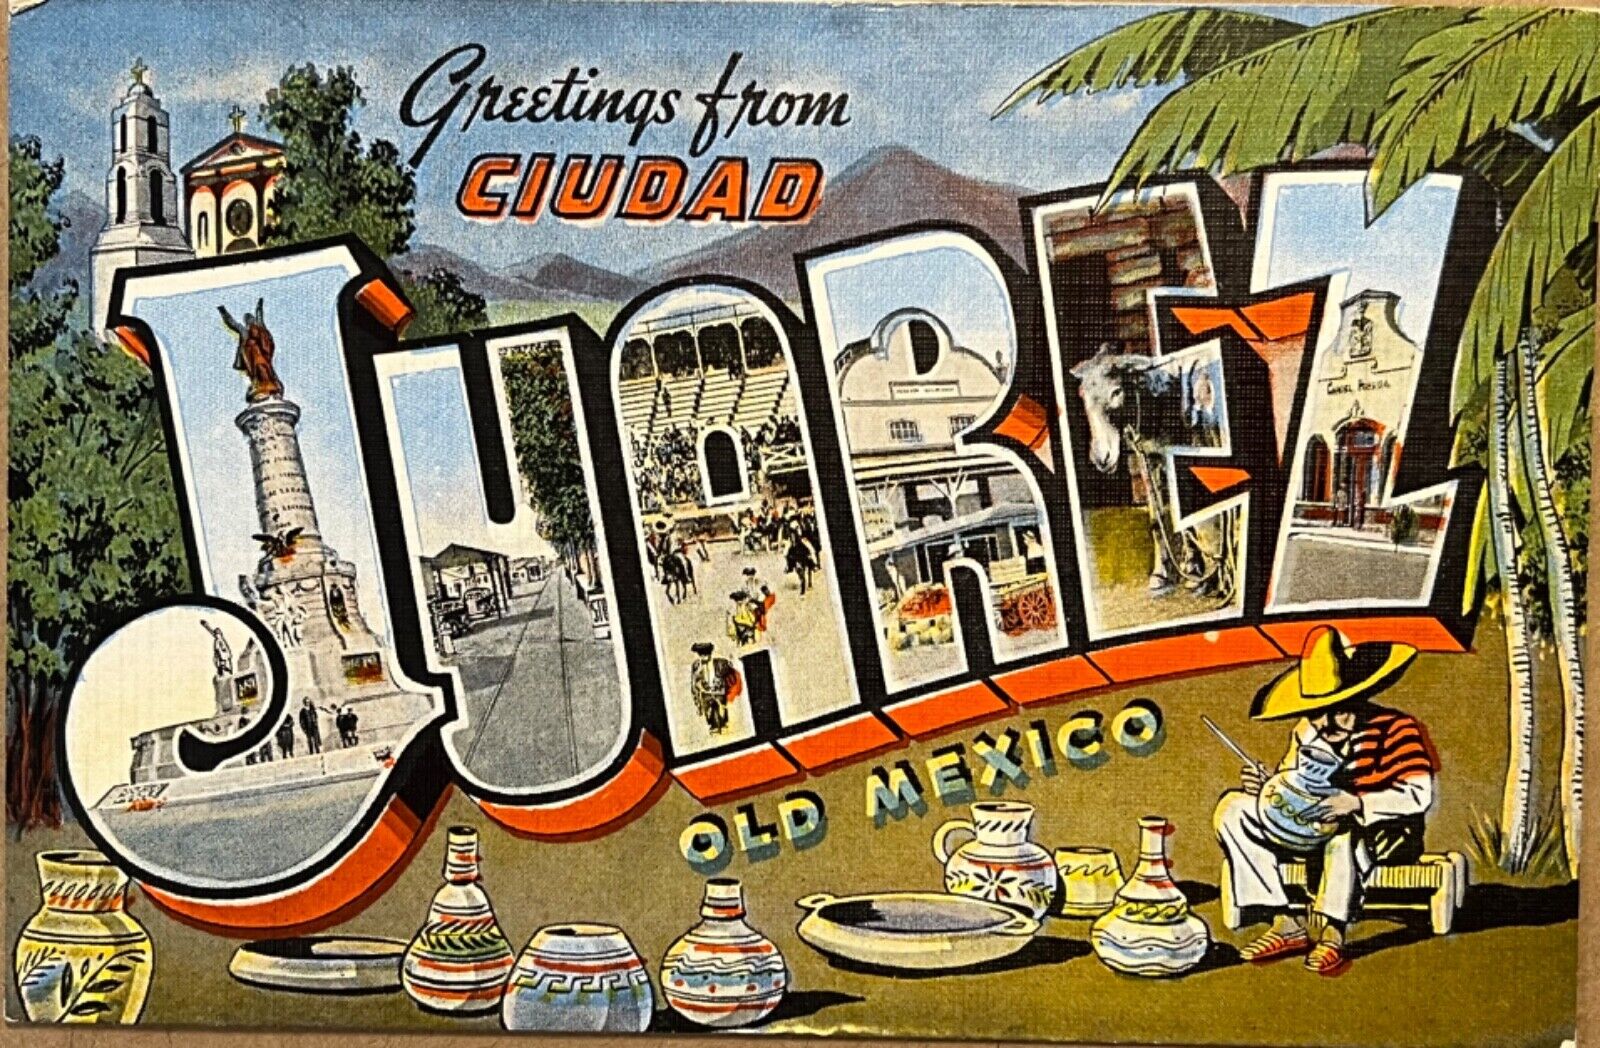 Cuidad Juarez Old Mexico Large Letter Greetings Postcard c1930